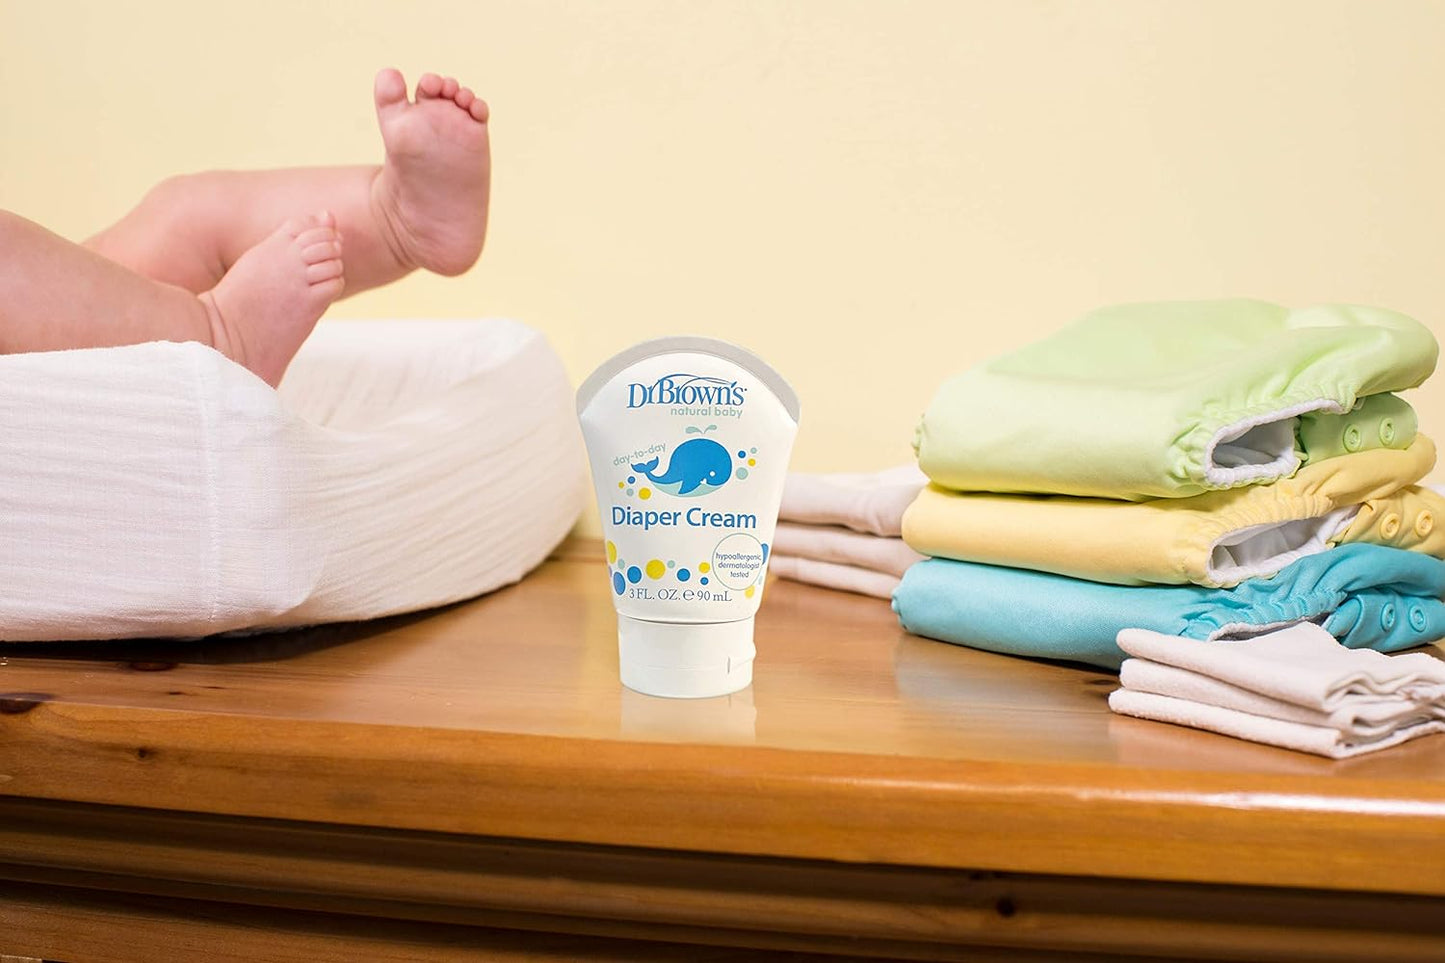 Dr. Brown's Natural Baby Diaper Cream 90ml